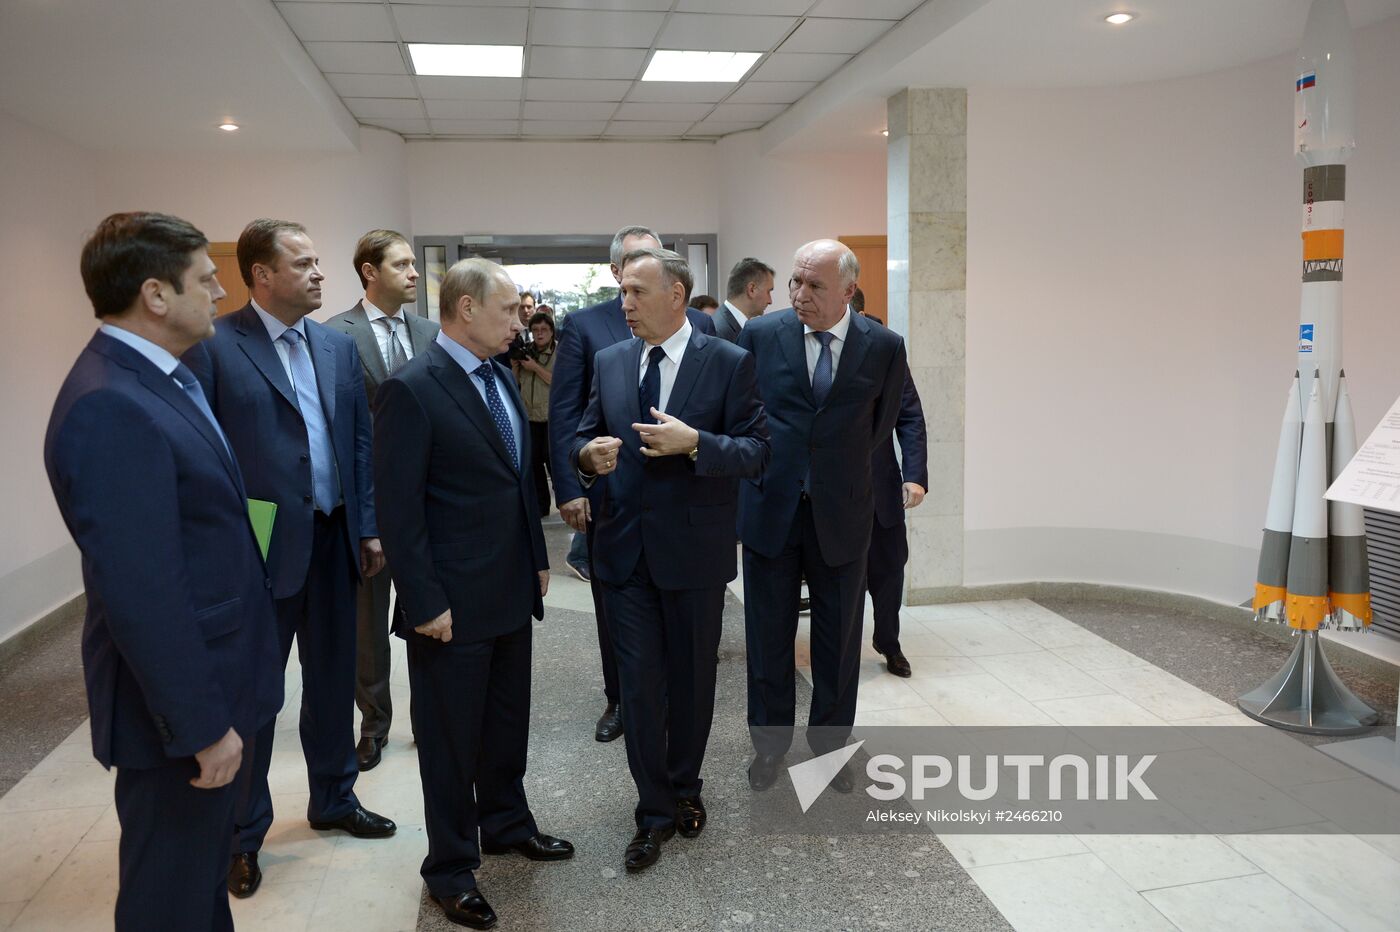 V.Putin's working visit to Samara Region